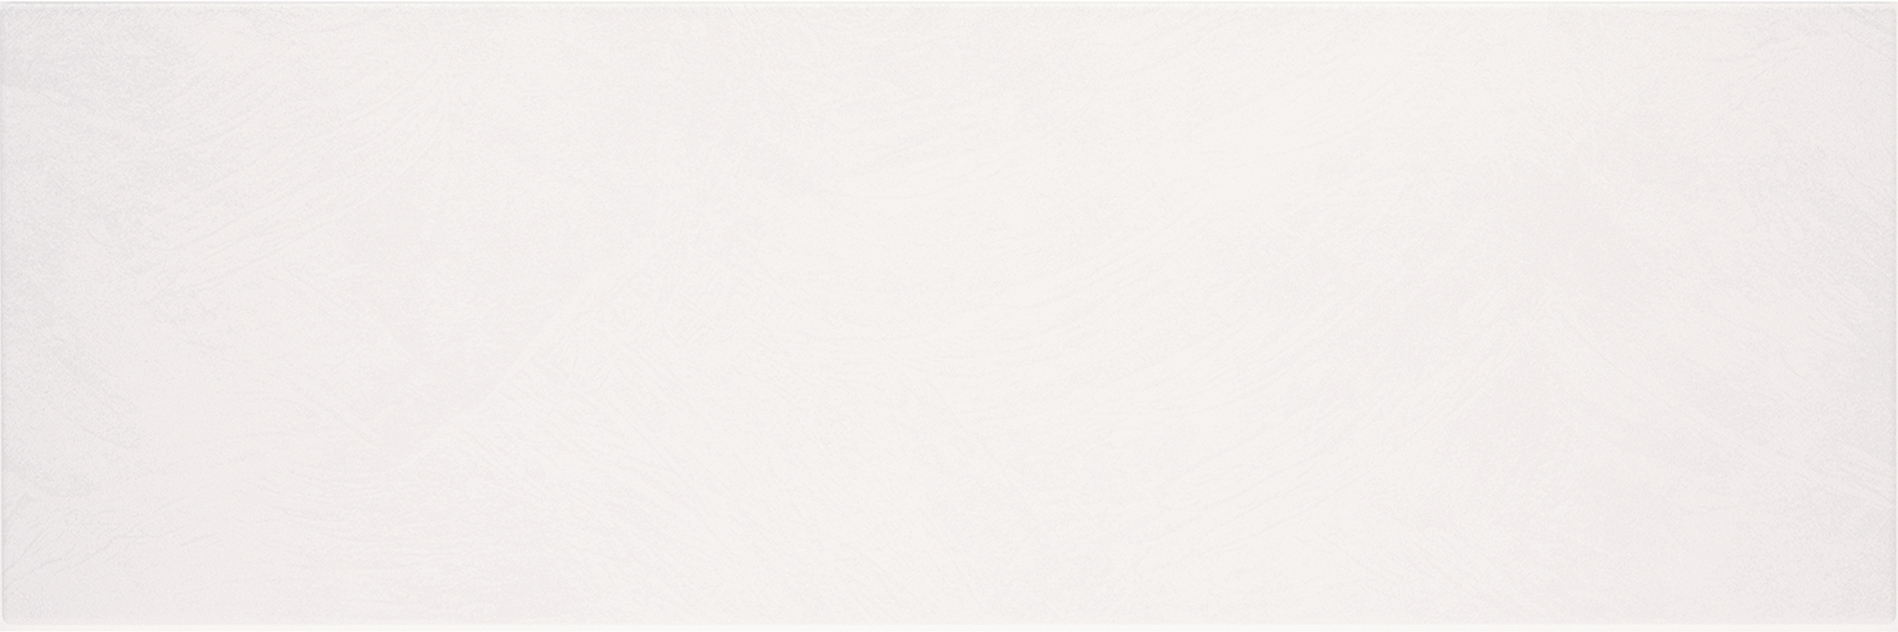 Настенная плитка AltaCera Touch White WT11TCH00 20x60 плитка настенная altacera paradise white 25x50 см